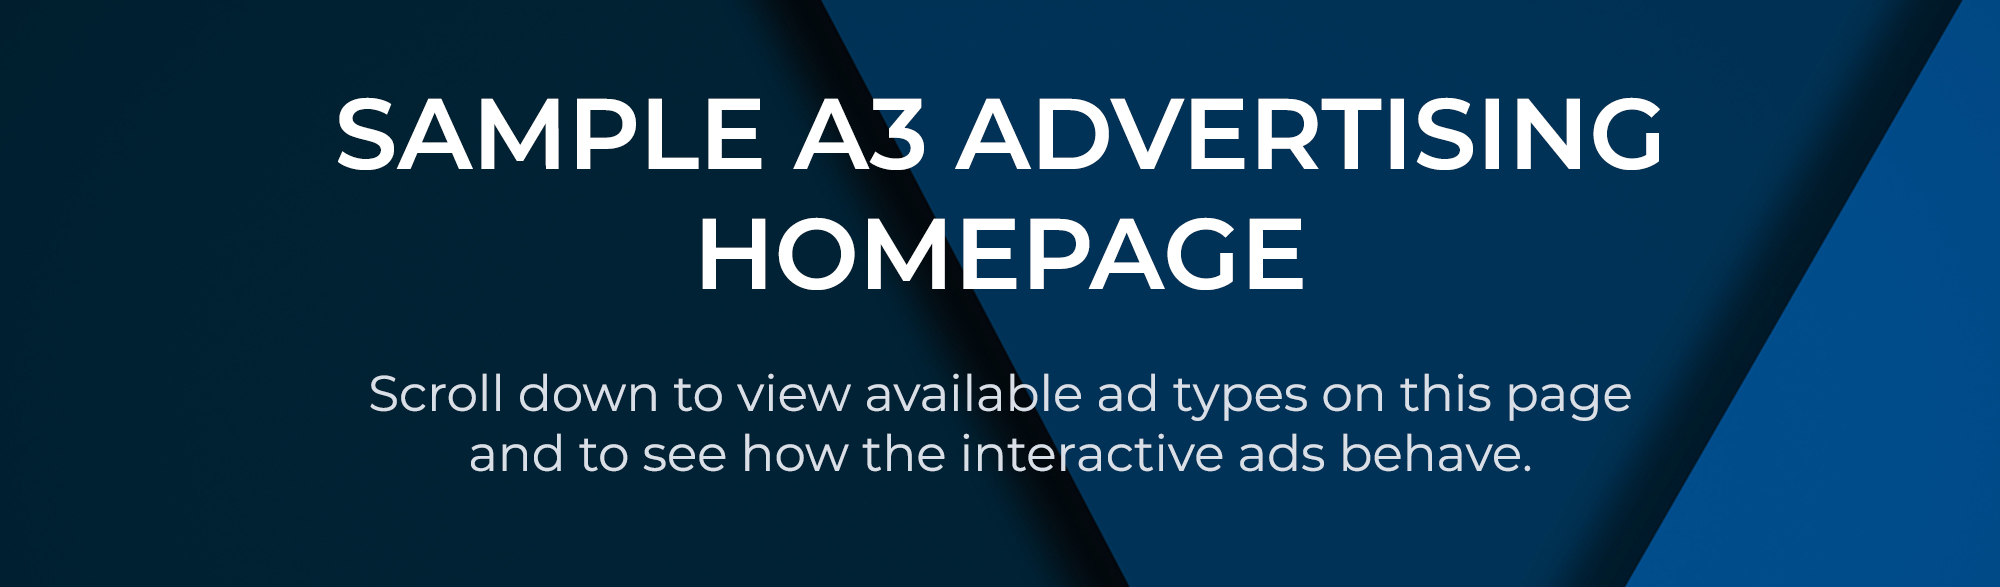 Sample A3 Advertising Homepage